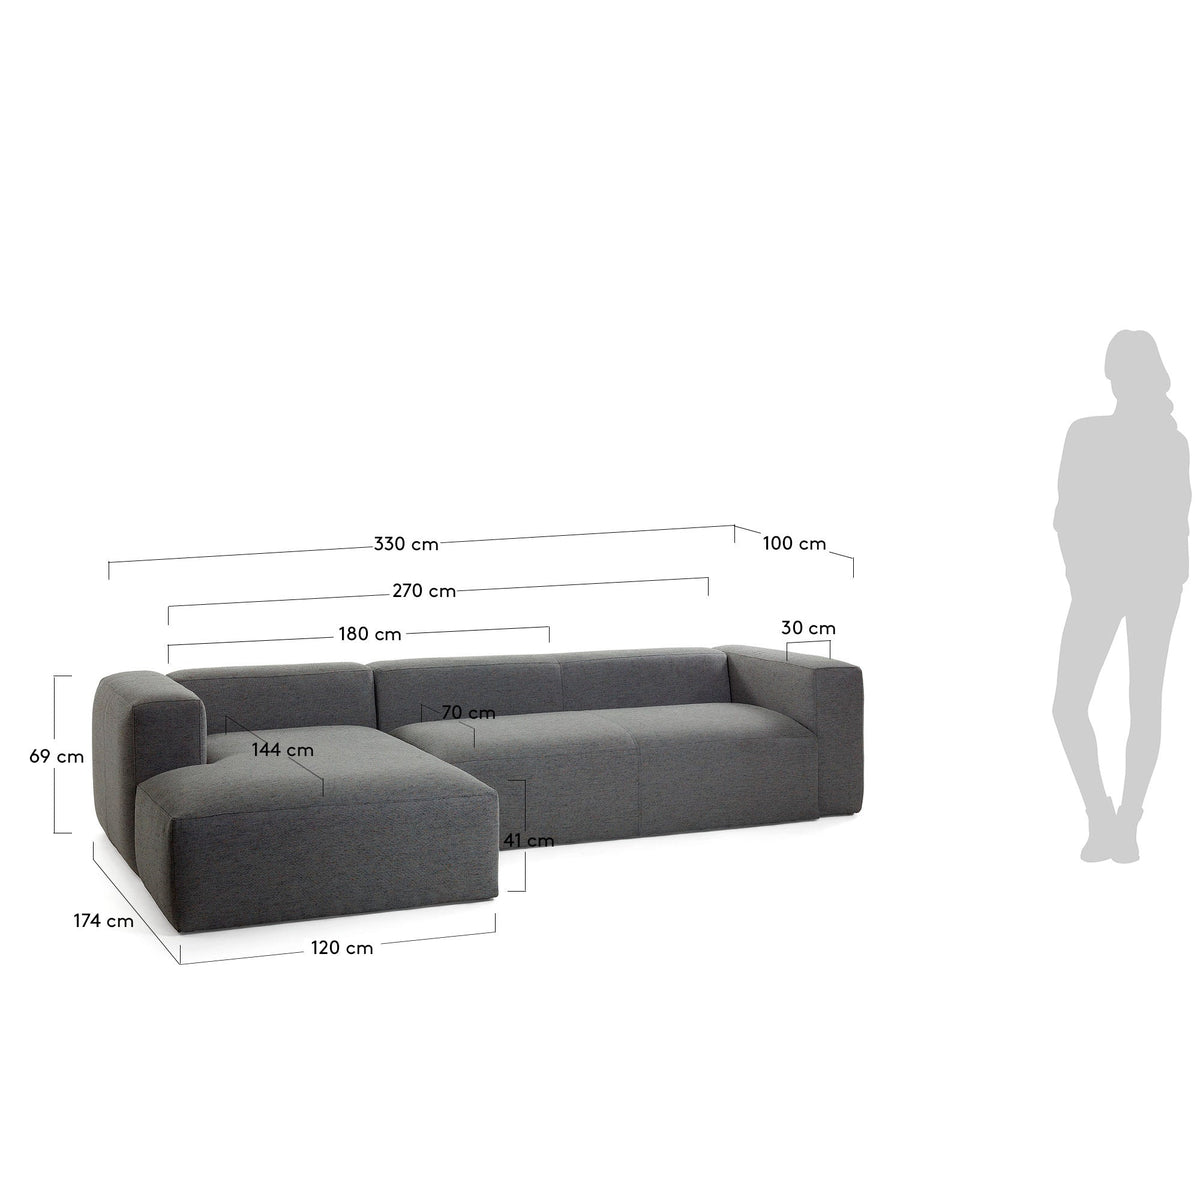 Gian Italian Design / 3S. Straight Arm L-Shape Sofa - Walls Nation